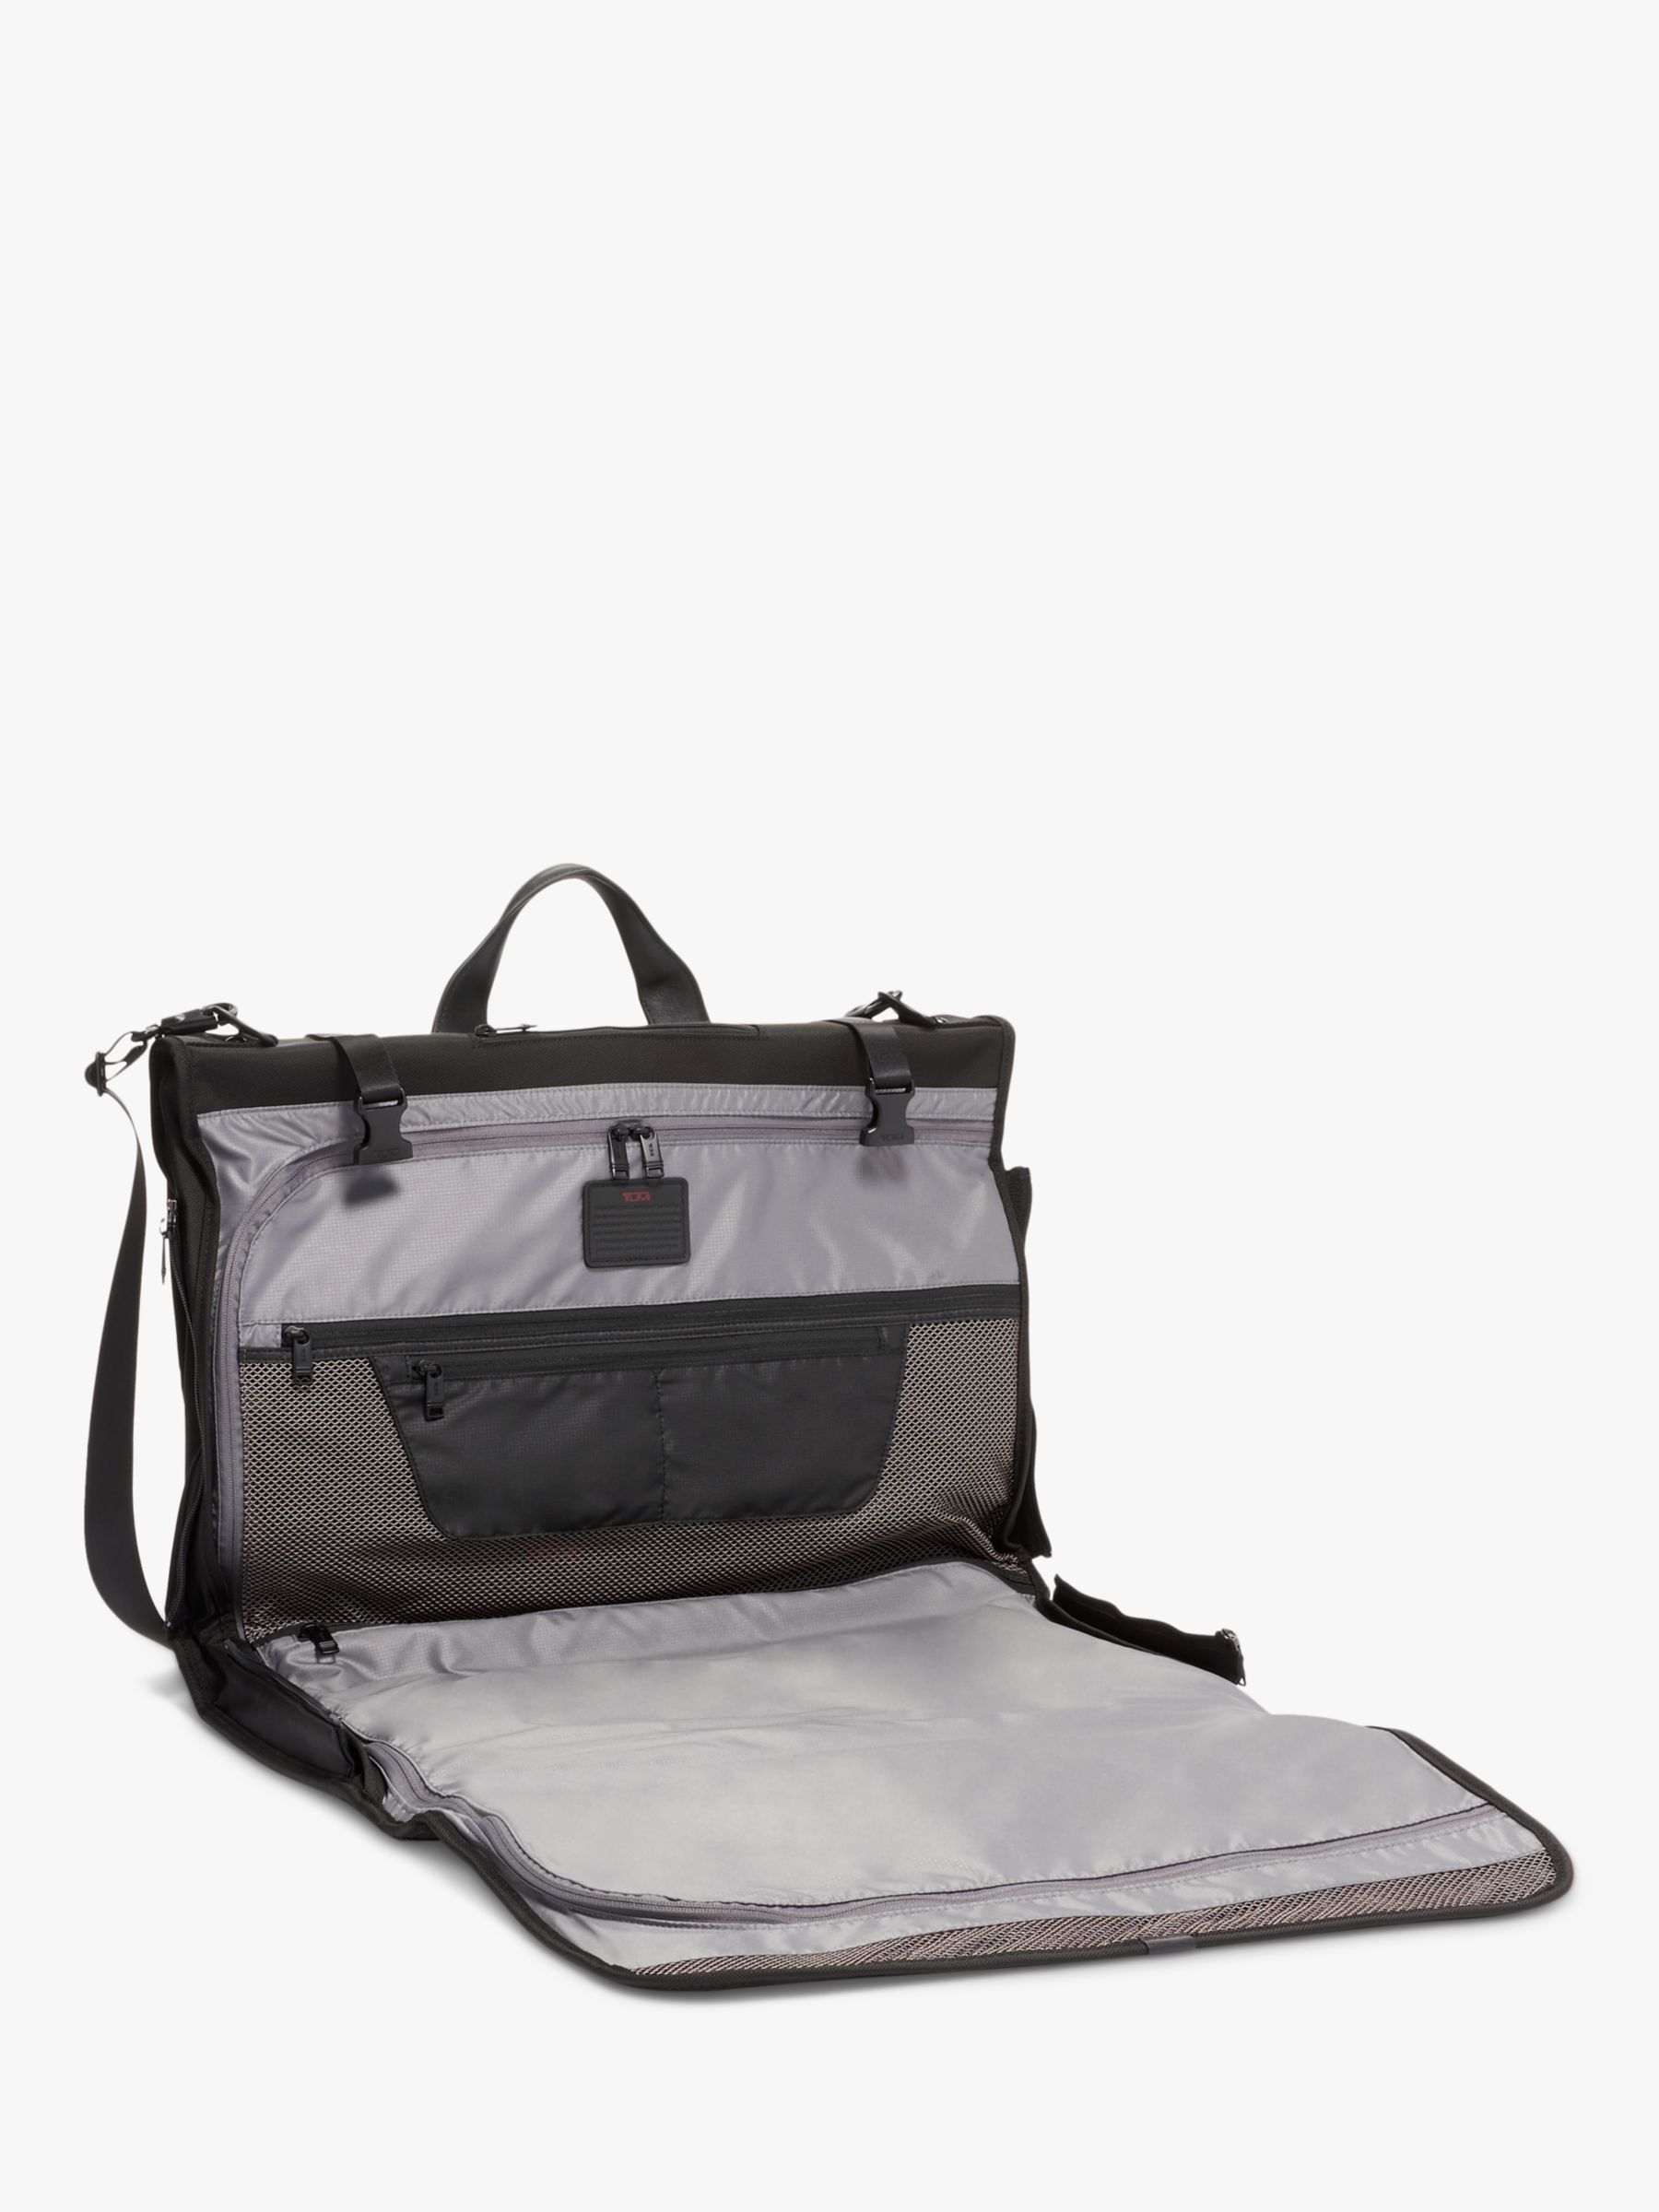 TUMI Alpha 3 Garment Bag Tri-Fold Carry-On Briefcase, Black at John ...